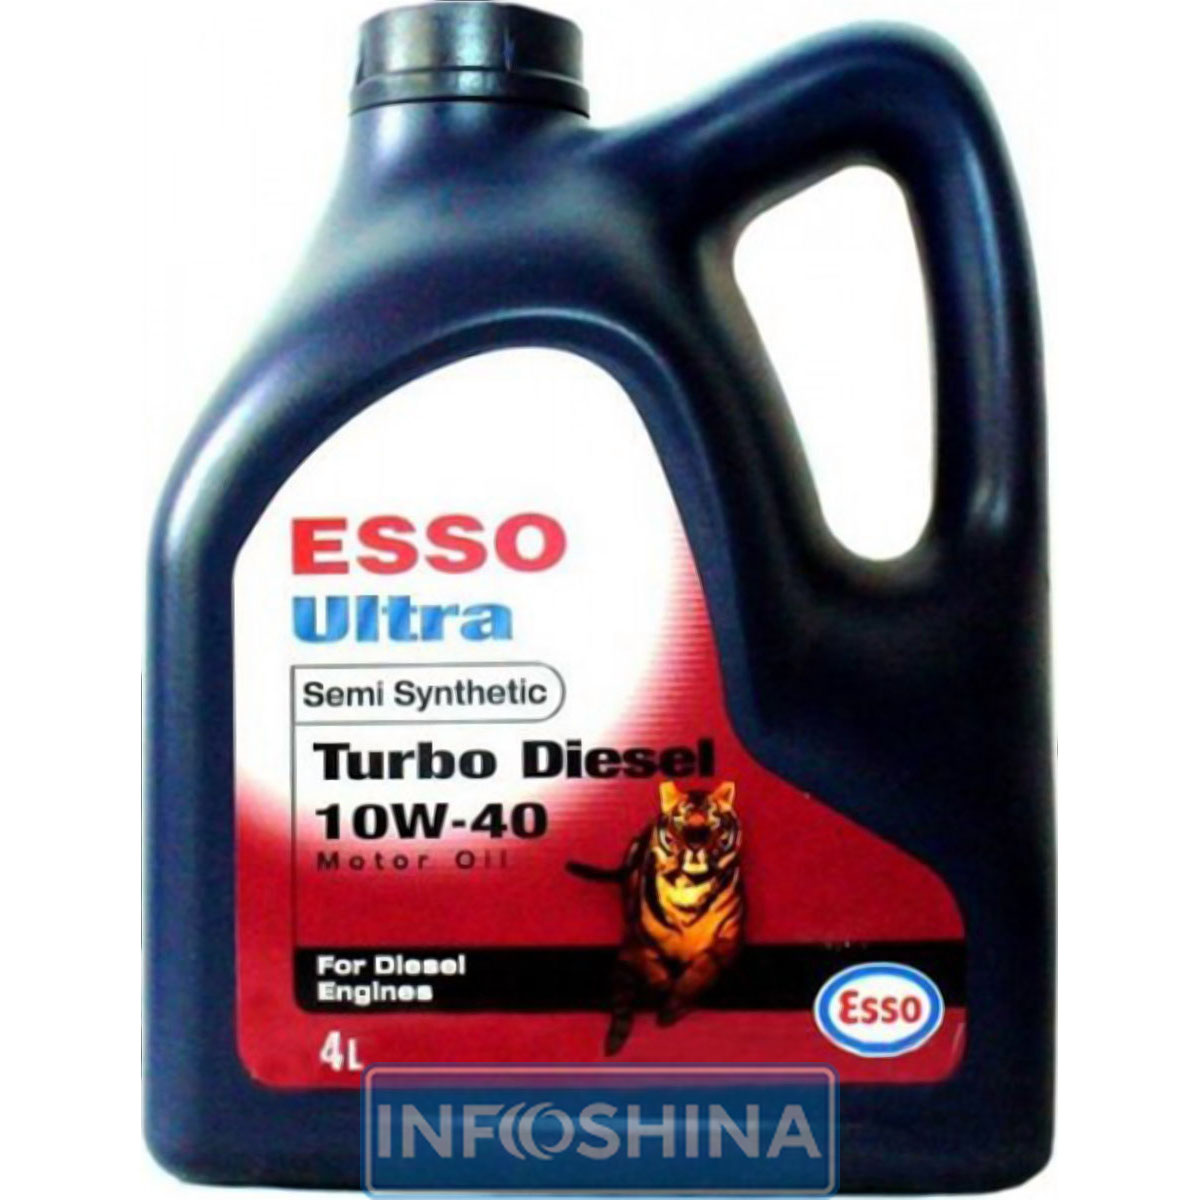 ESSO Ultra Turbo Diesel 10W-40